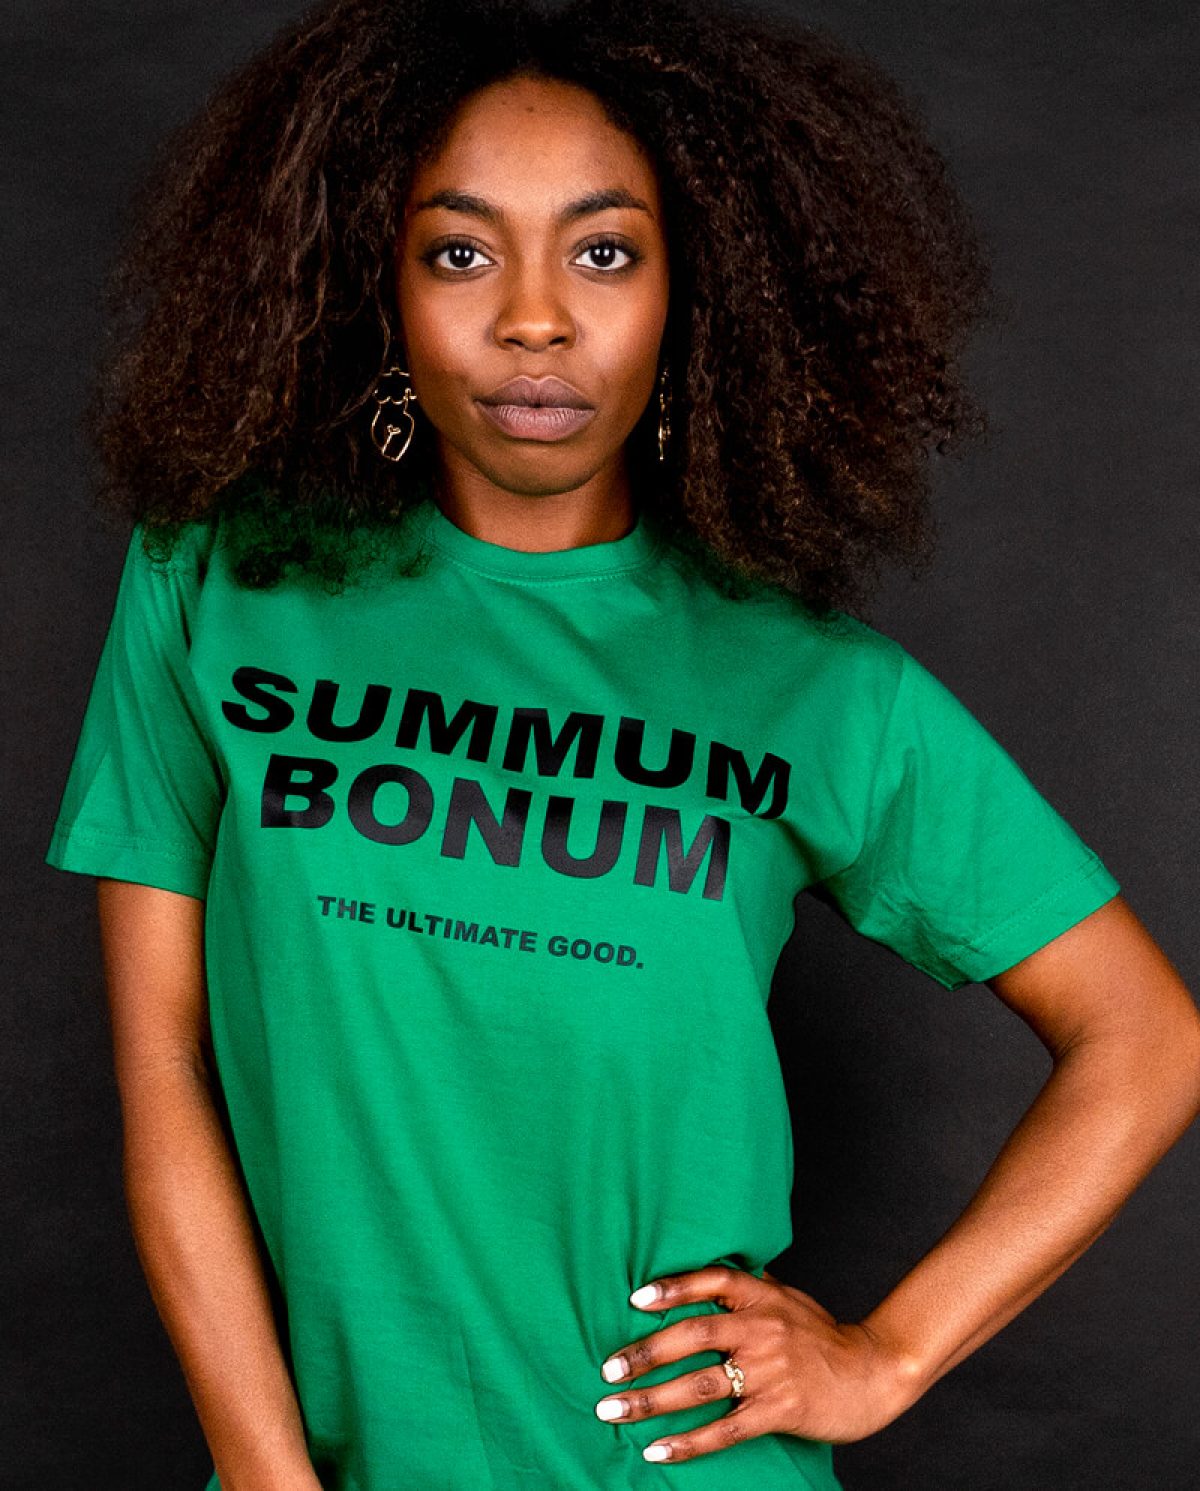 Rijk vertrouwen eindeloos Summum bonum - the ultimate good t-shirt - ALLRIOT